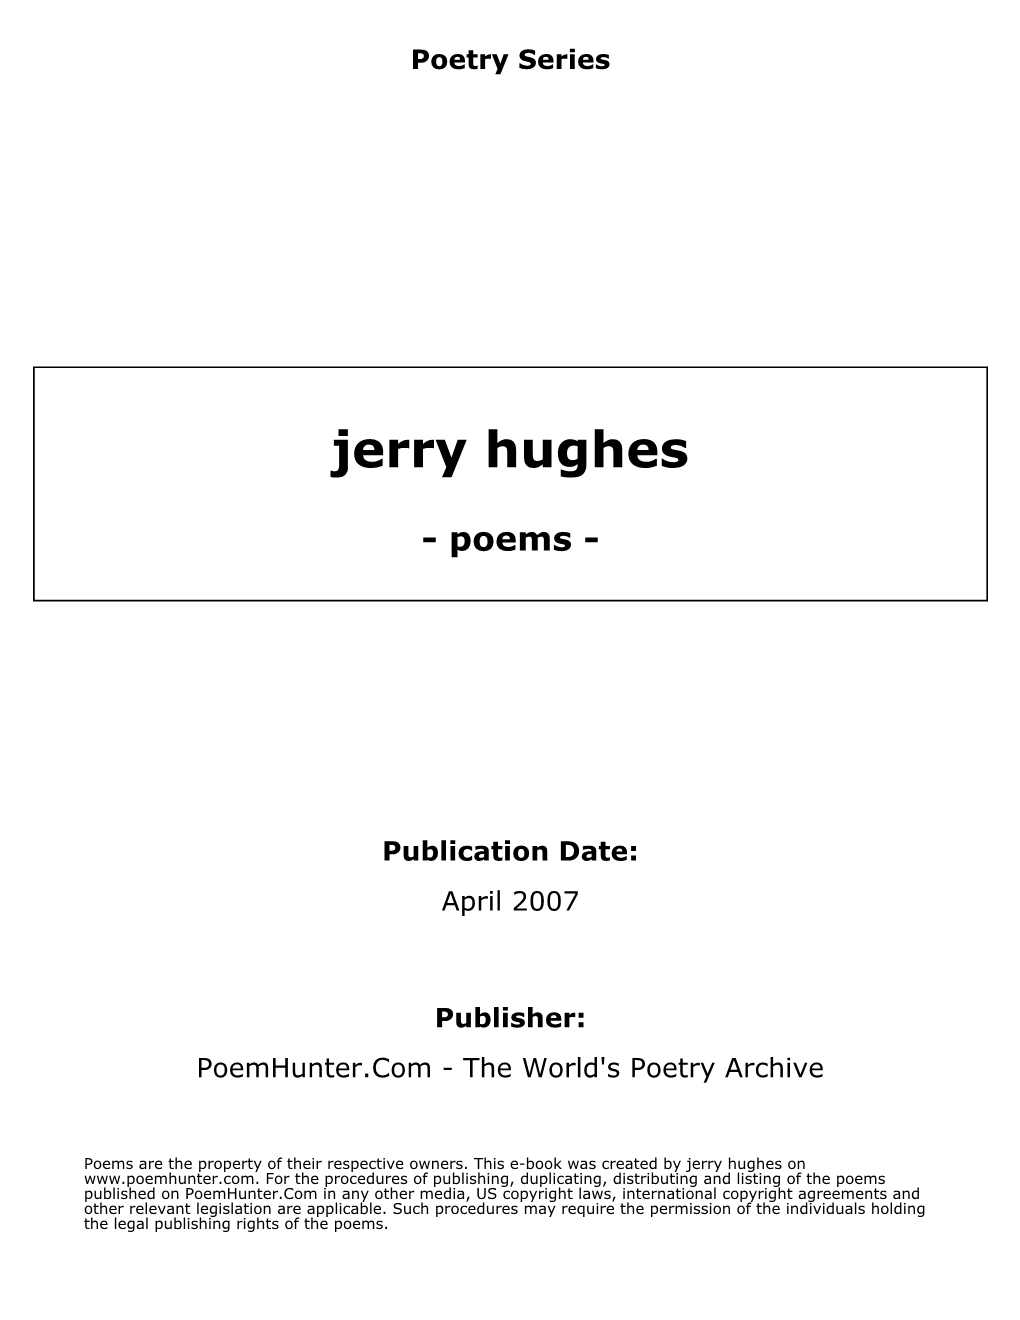 Jerry Hughes